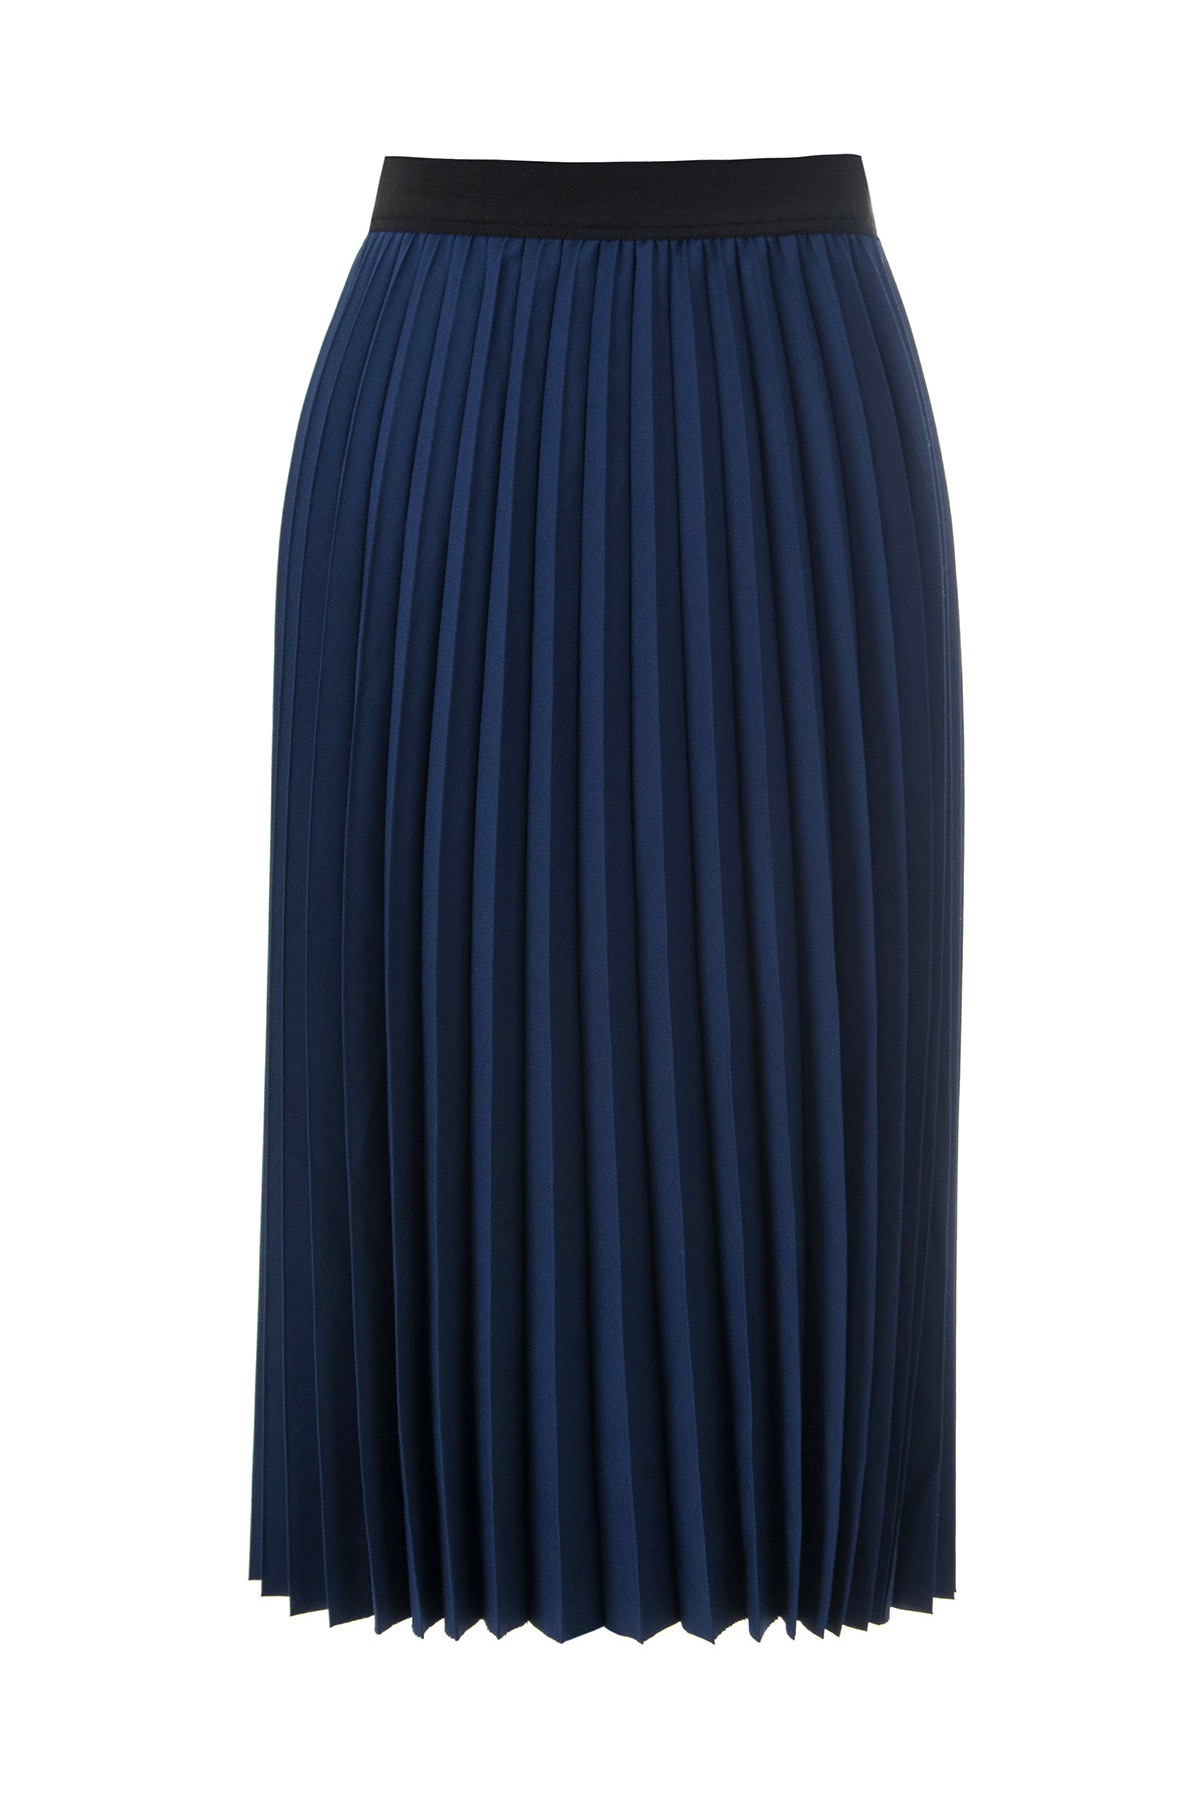 Below the knee pleated blue skirt , photo 6